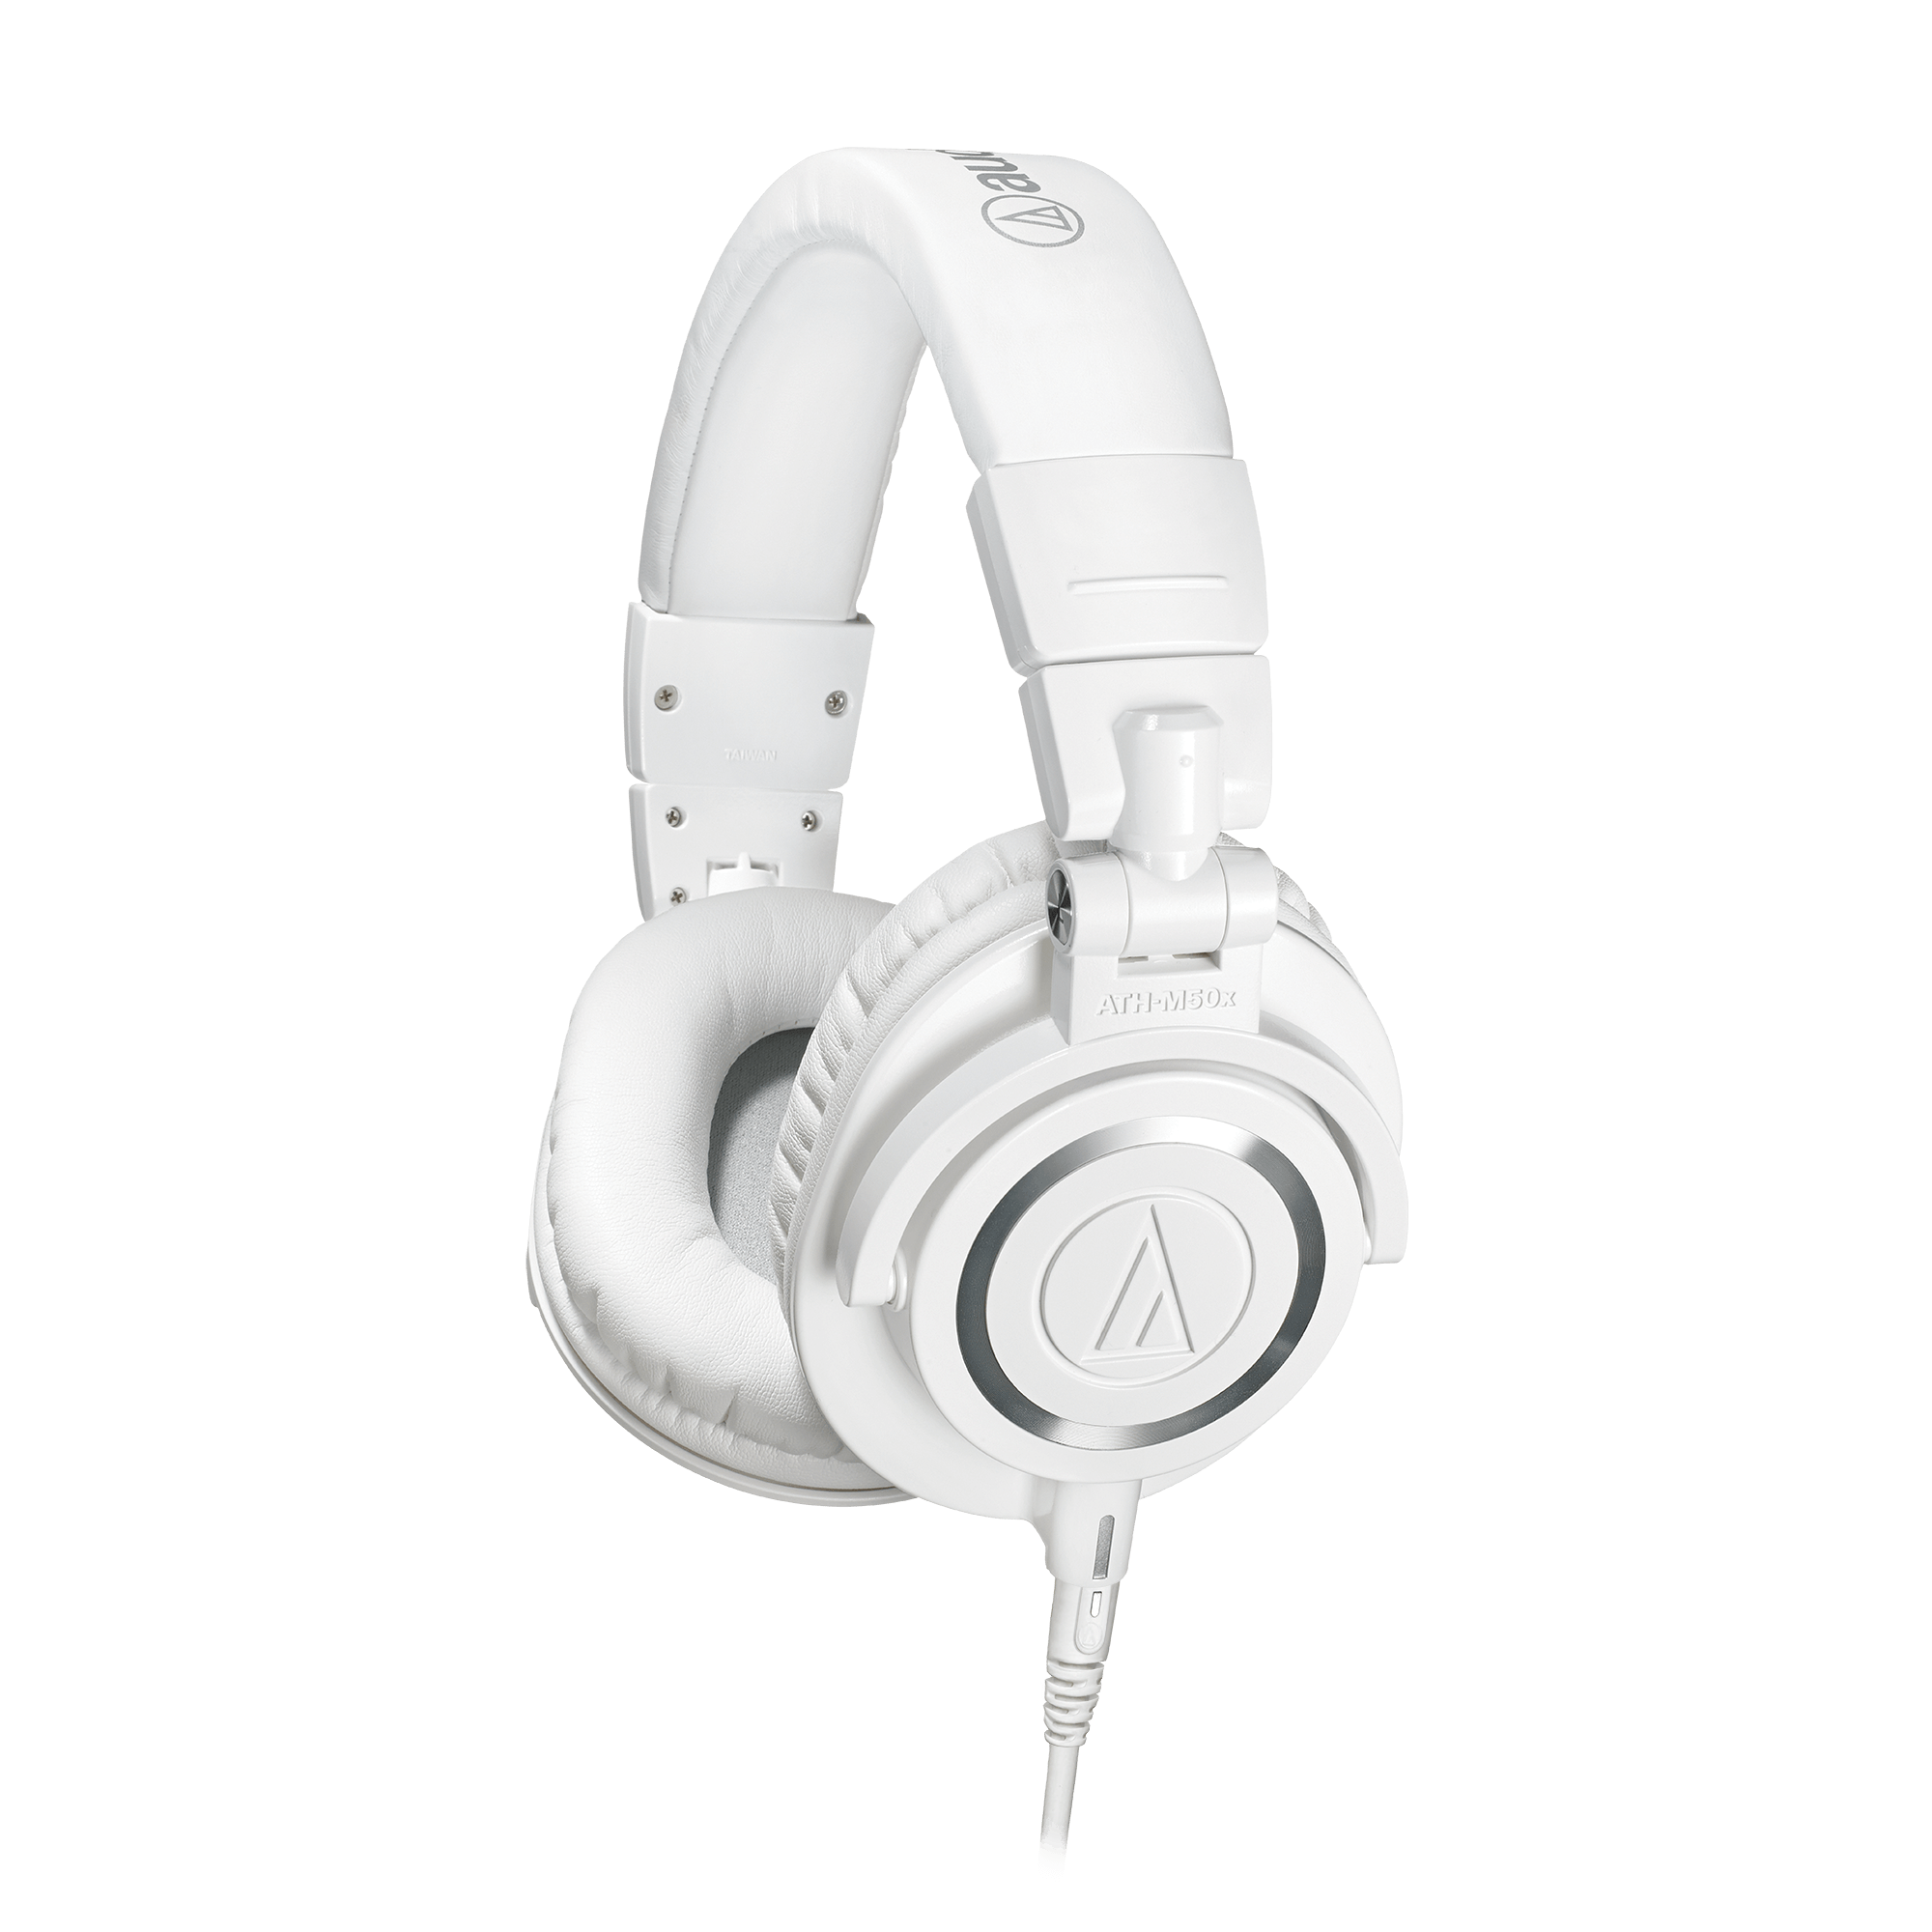 Auriculares Audio-technica M-series Ath-m60x Profesional AUDIOFILO